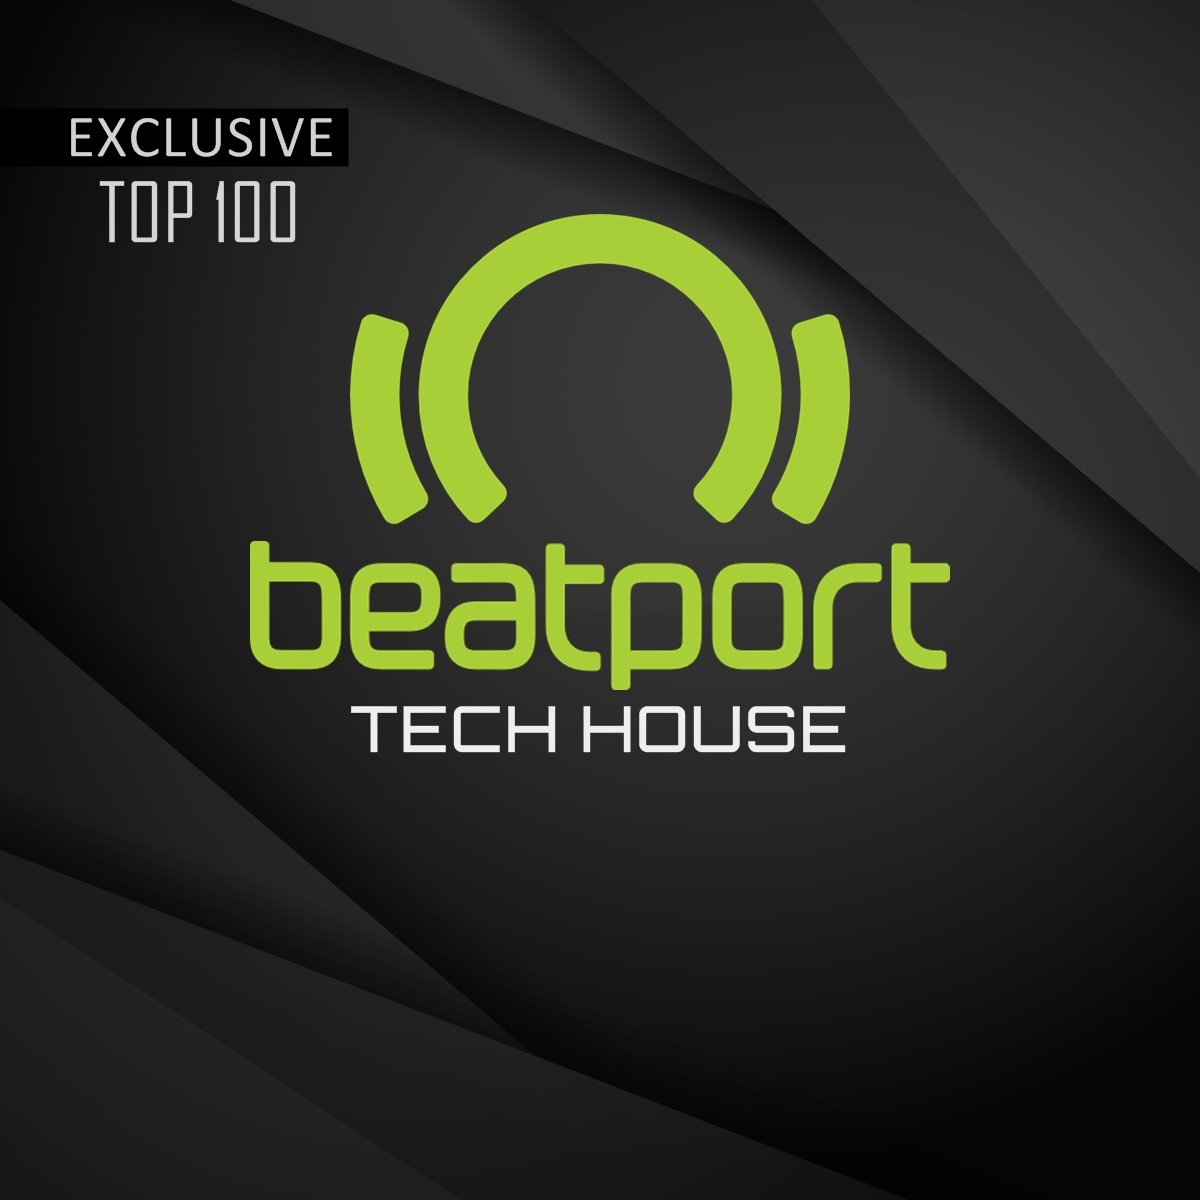 Beatport Tech House Top 100 January 2021